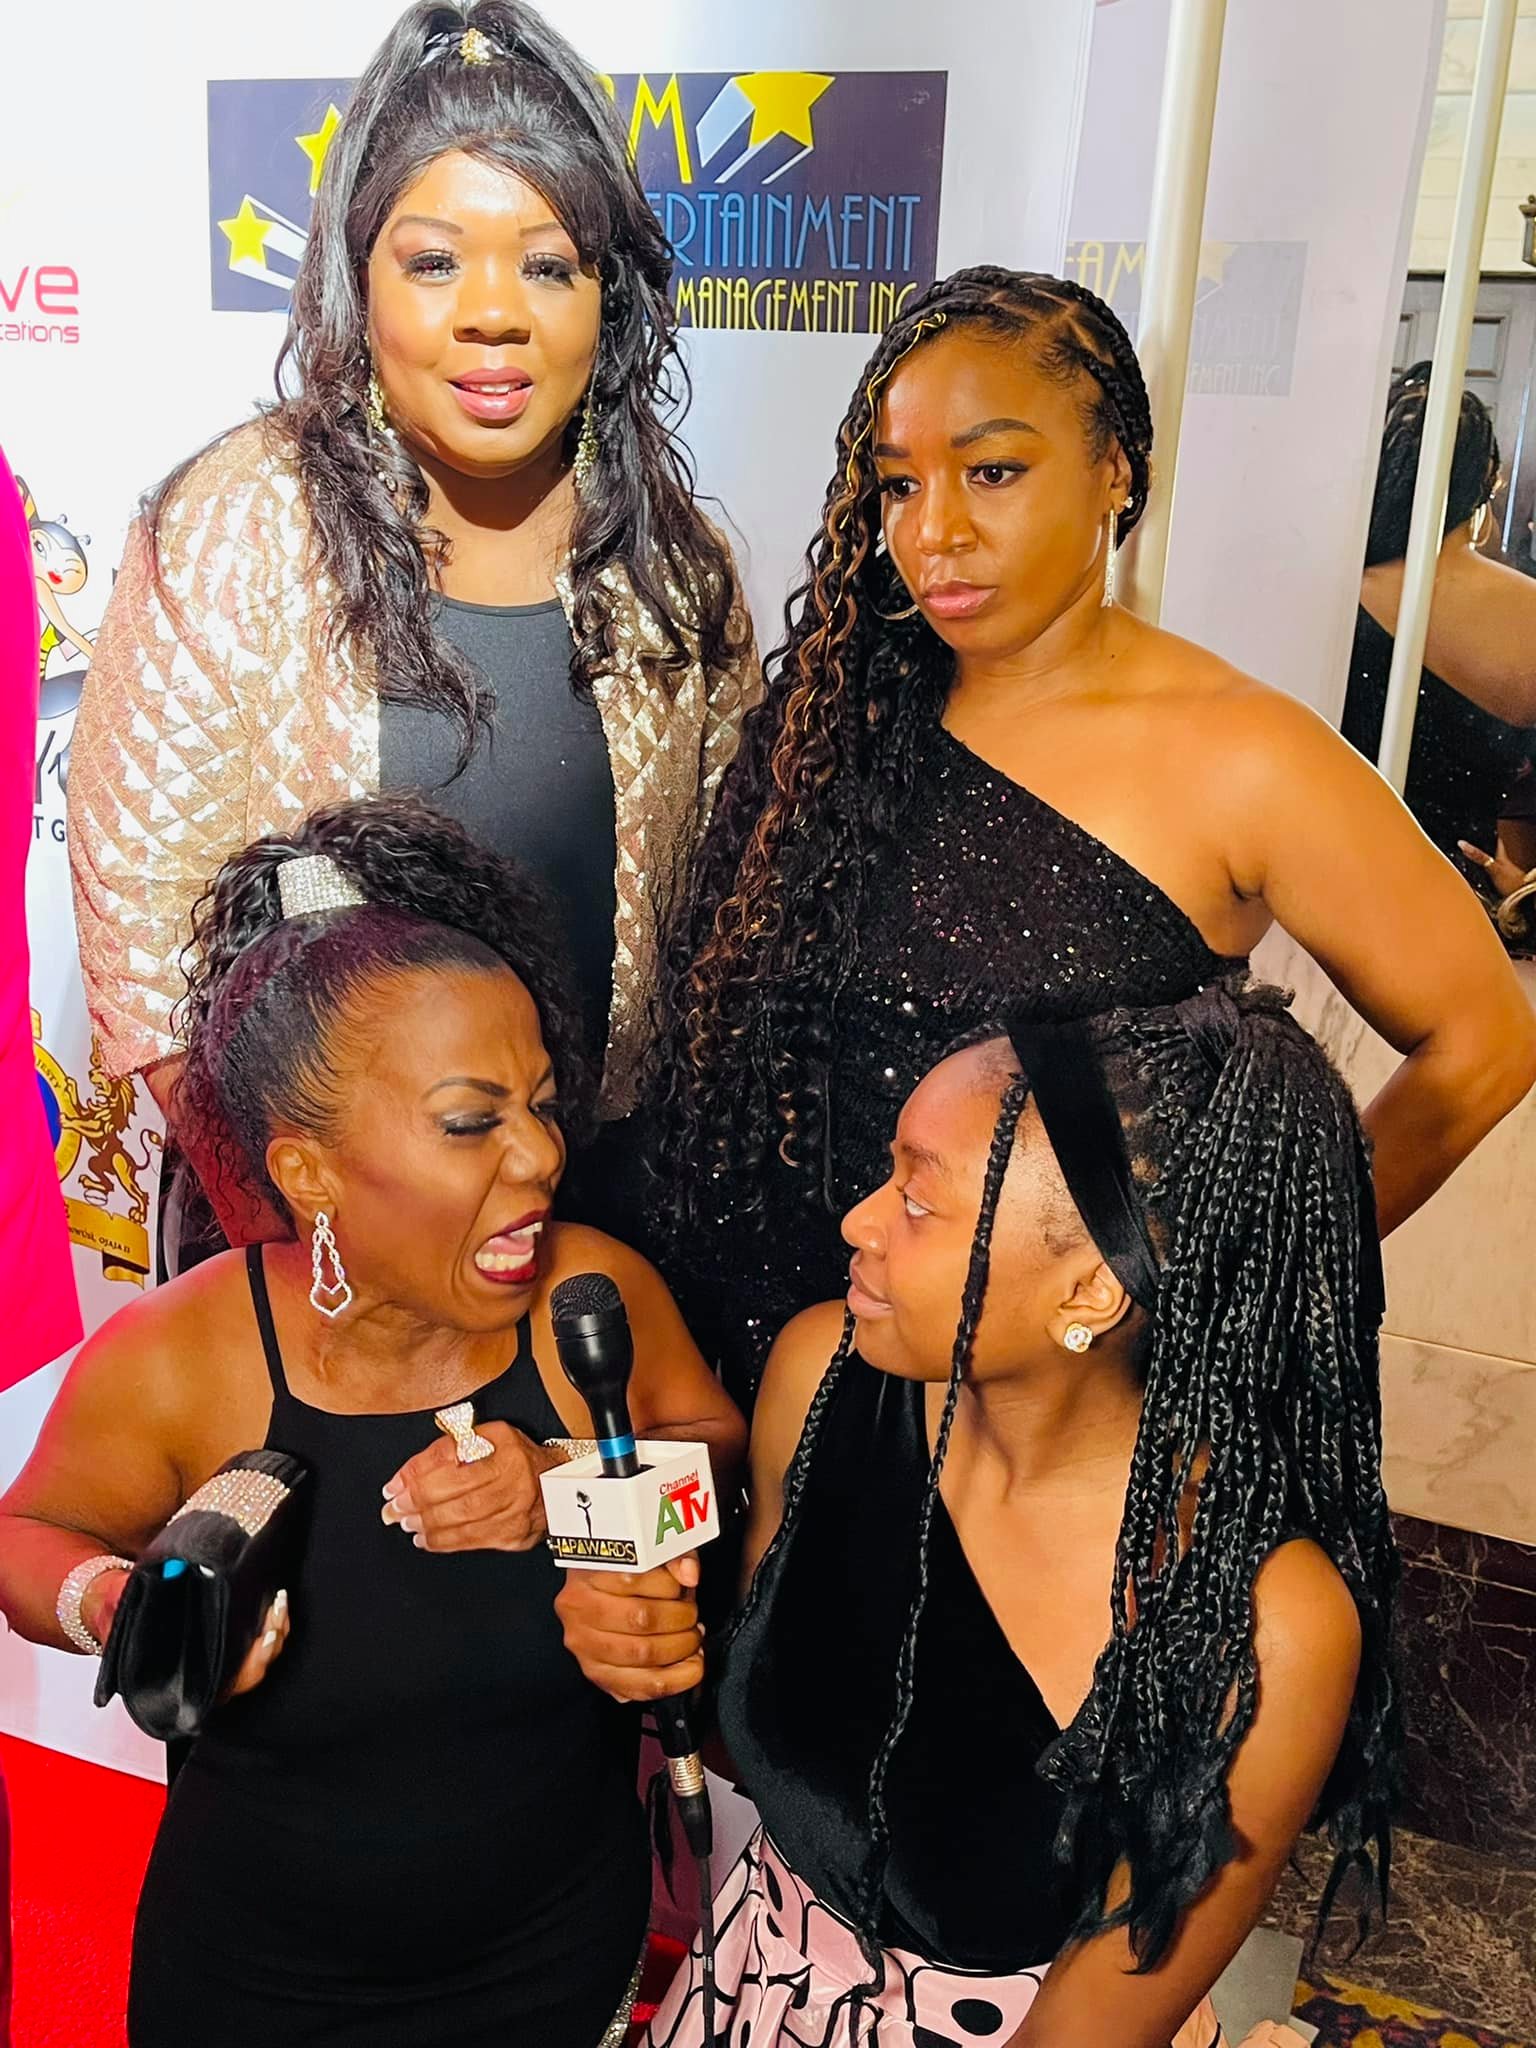 Thandi Chirwa interviewing Tonya Banks from Lil Women Los Angeles